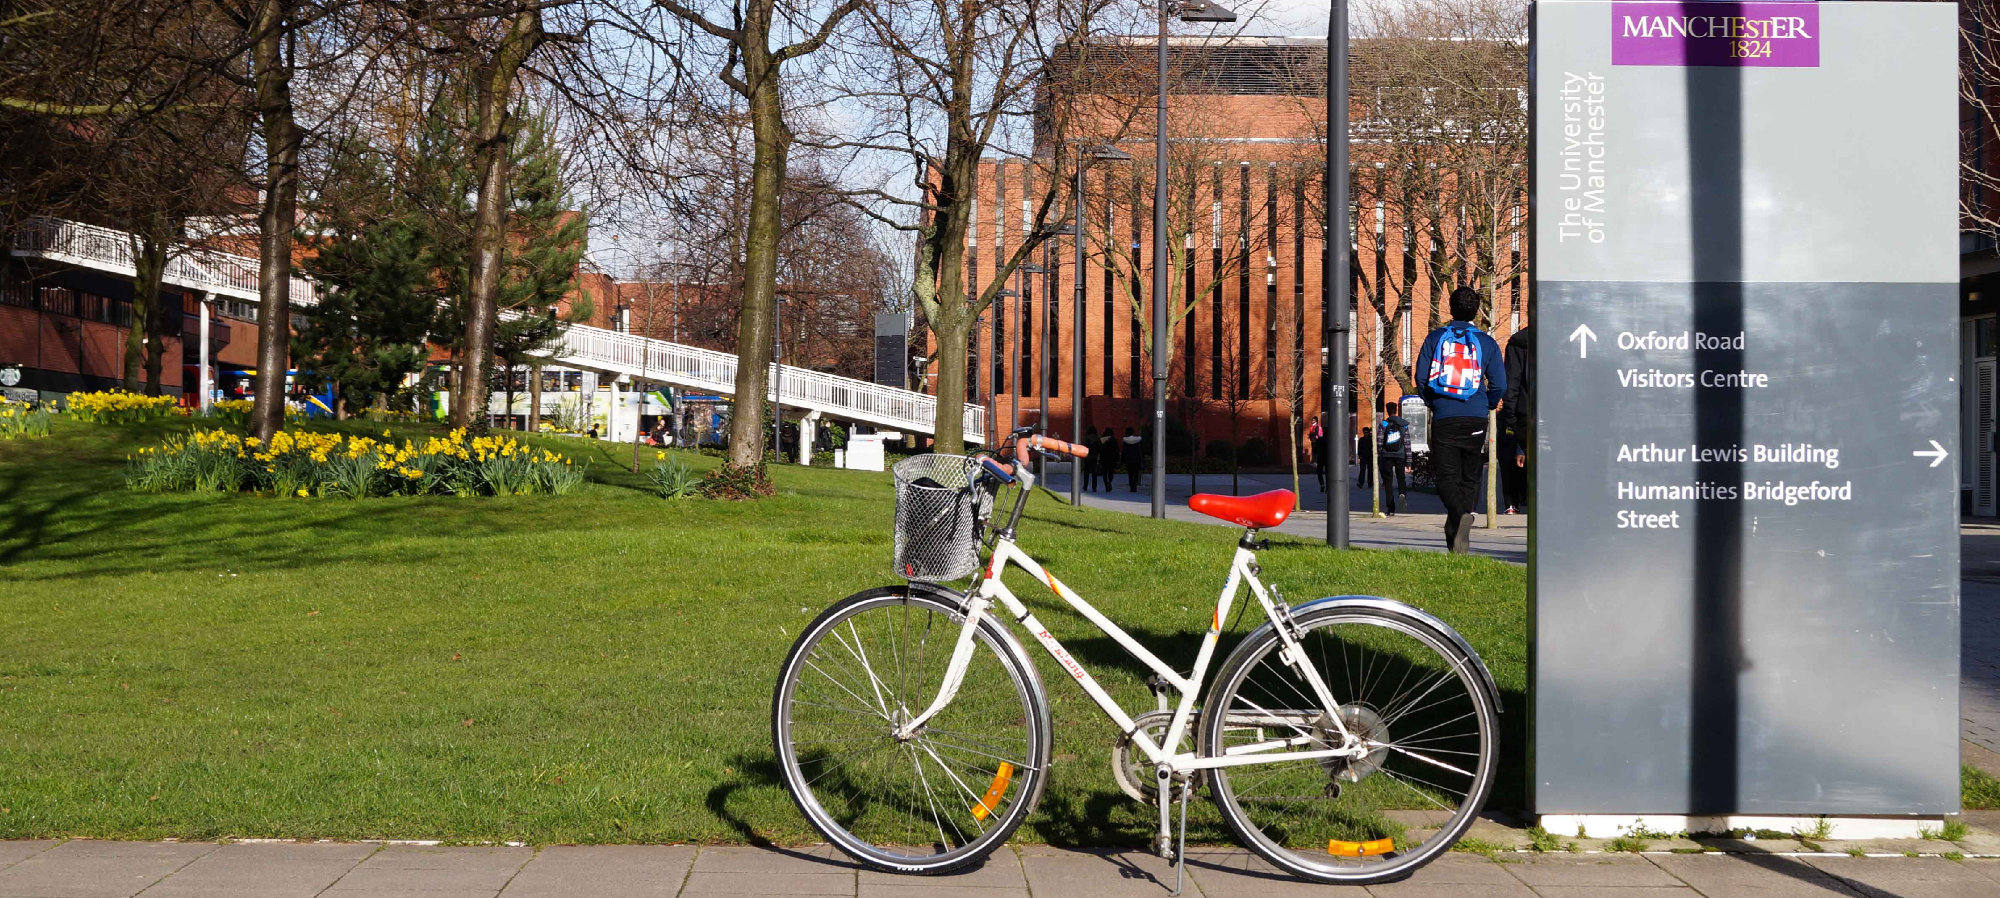 Manchester Bikes on Campus